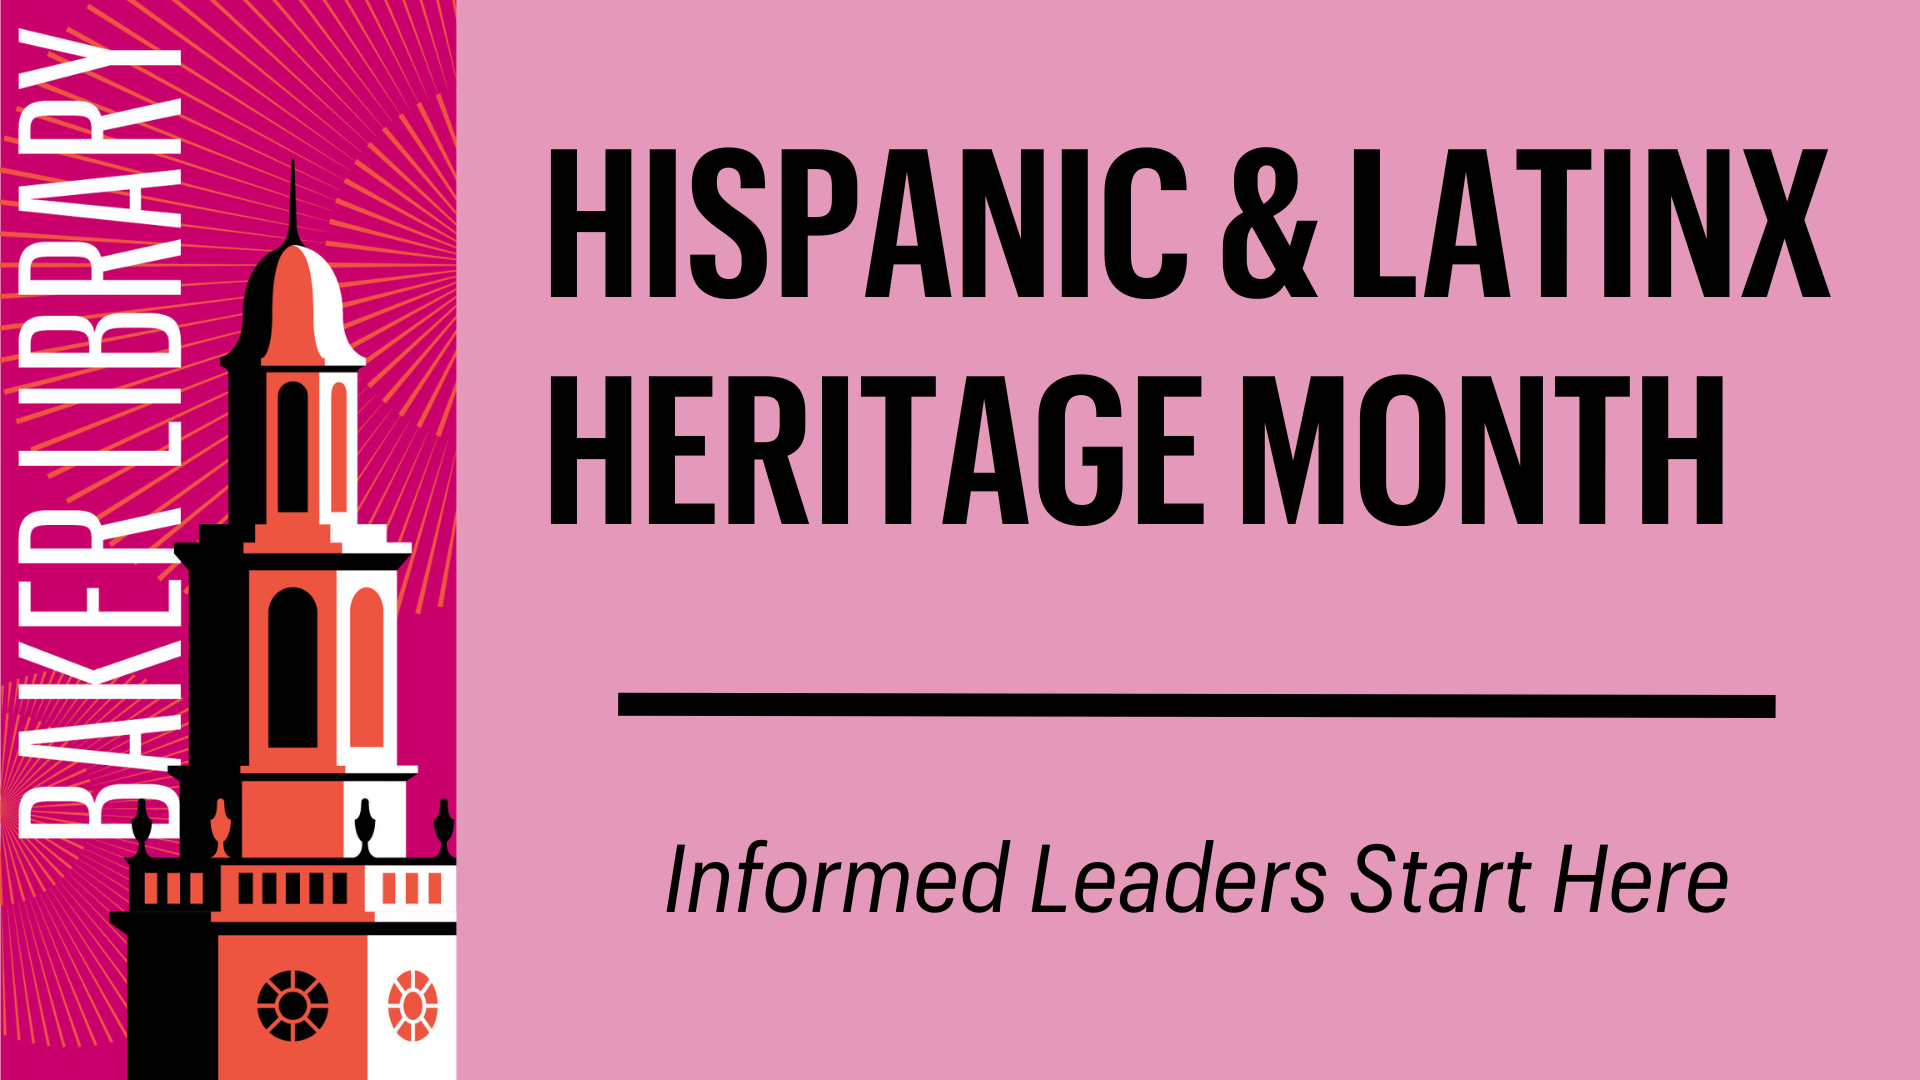 "Hispanic & Latinx Heritage Month", "Informed Leaders Start Here", "Baker Library"